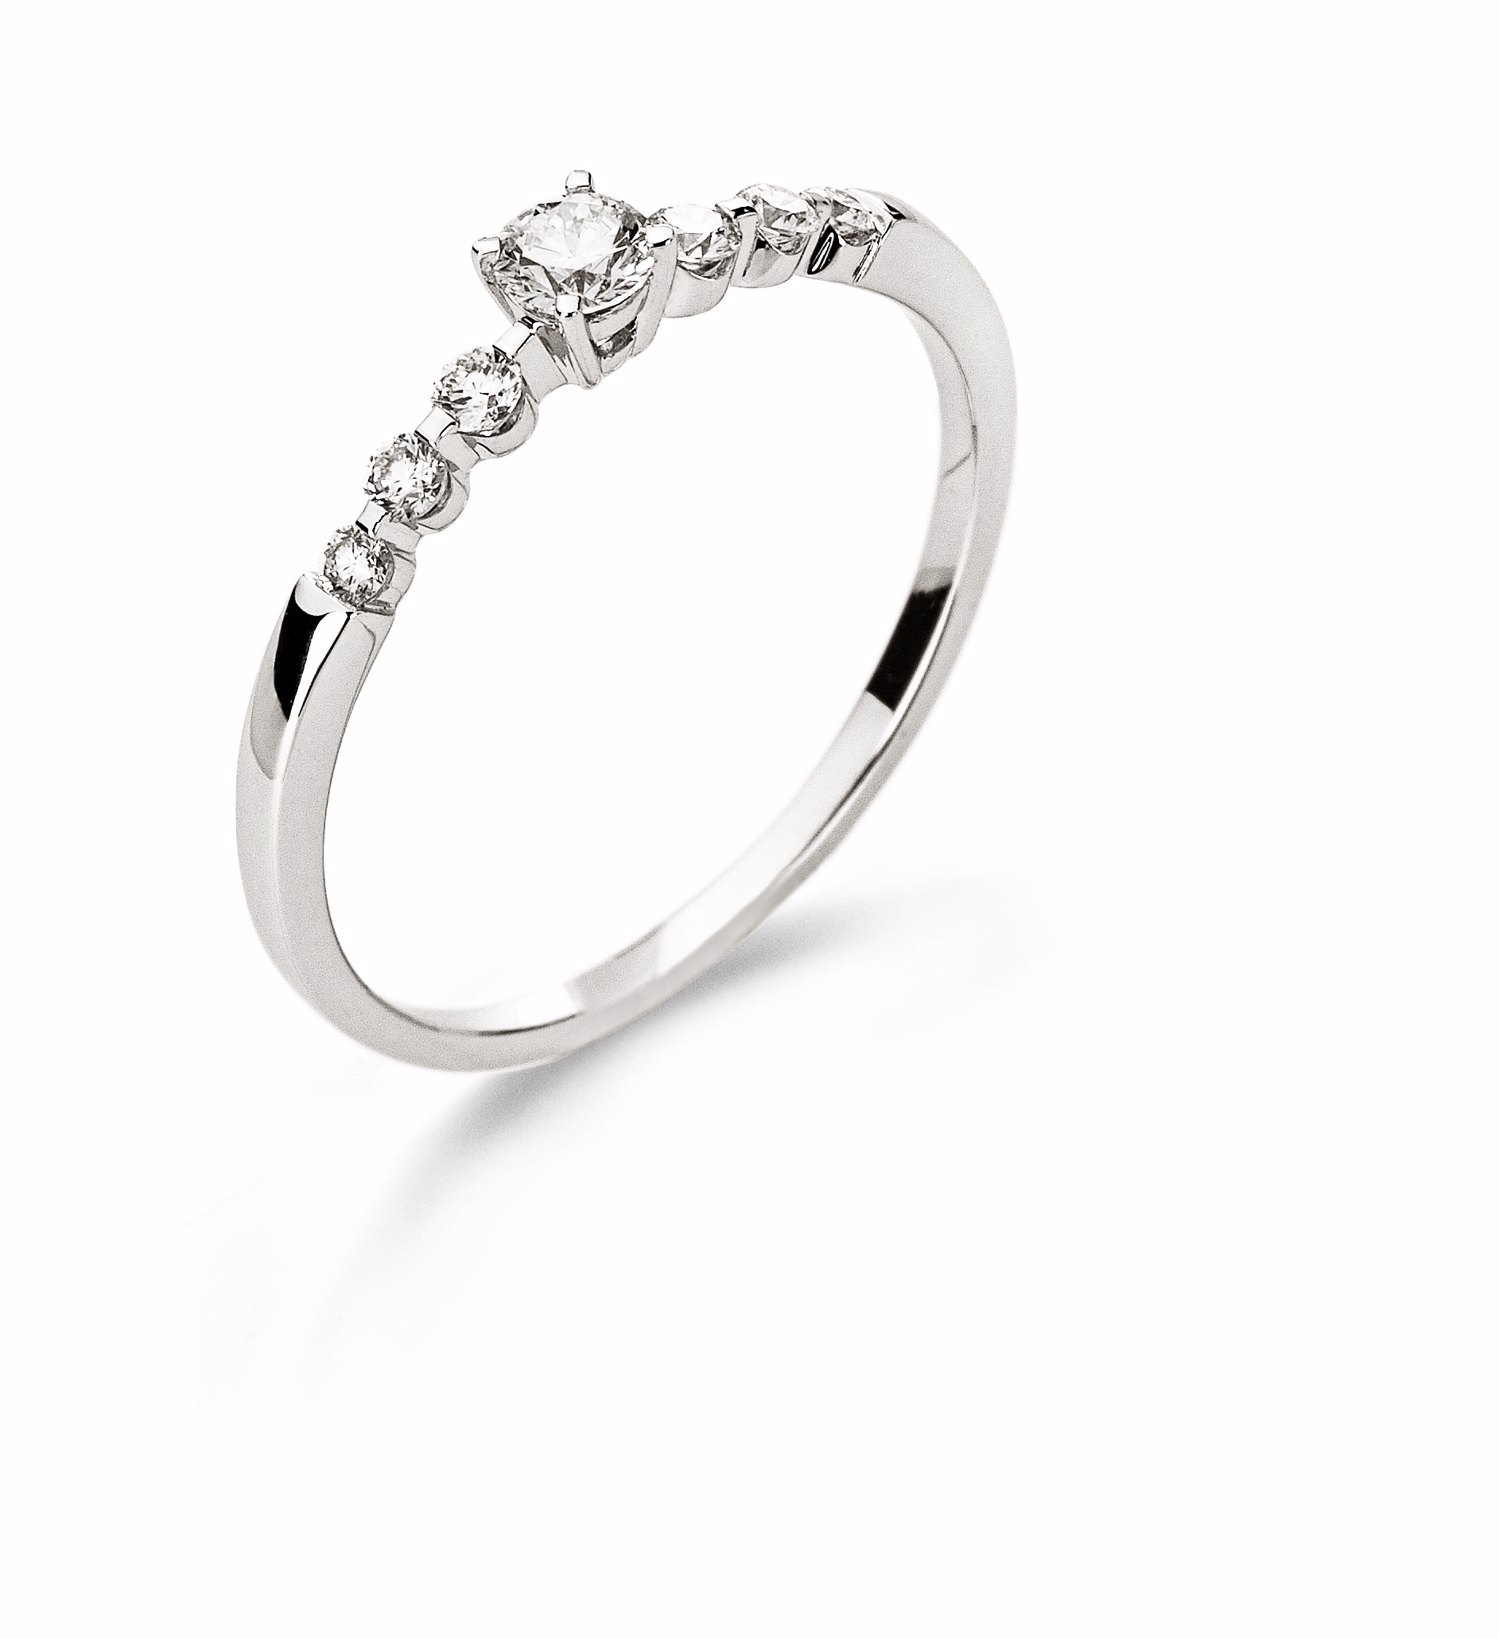 AURONOS Style Ring white gold 18K diamonds 0.27ct